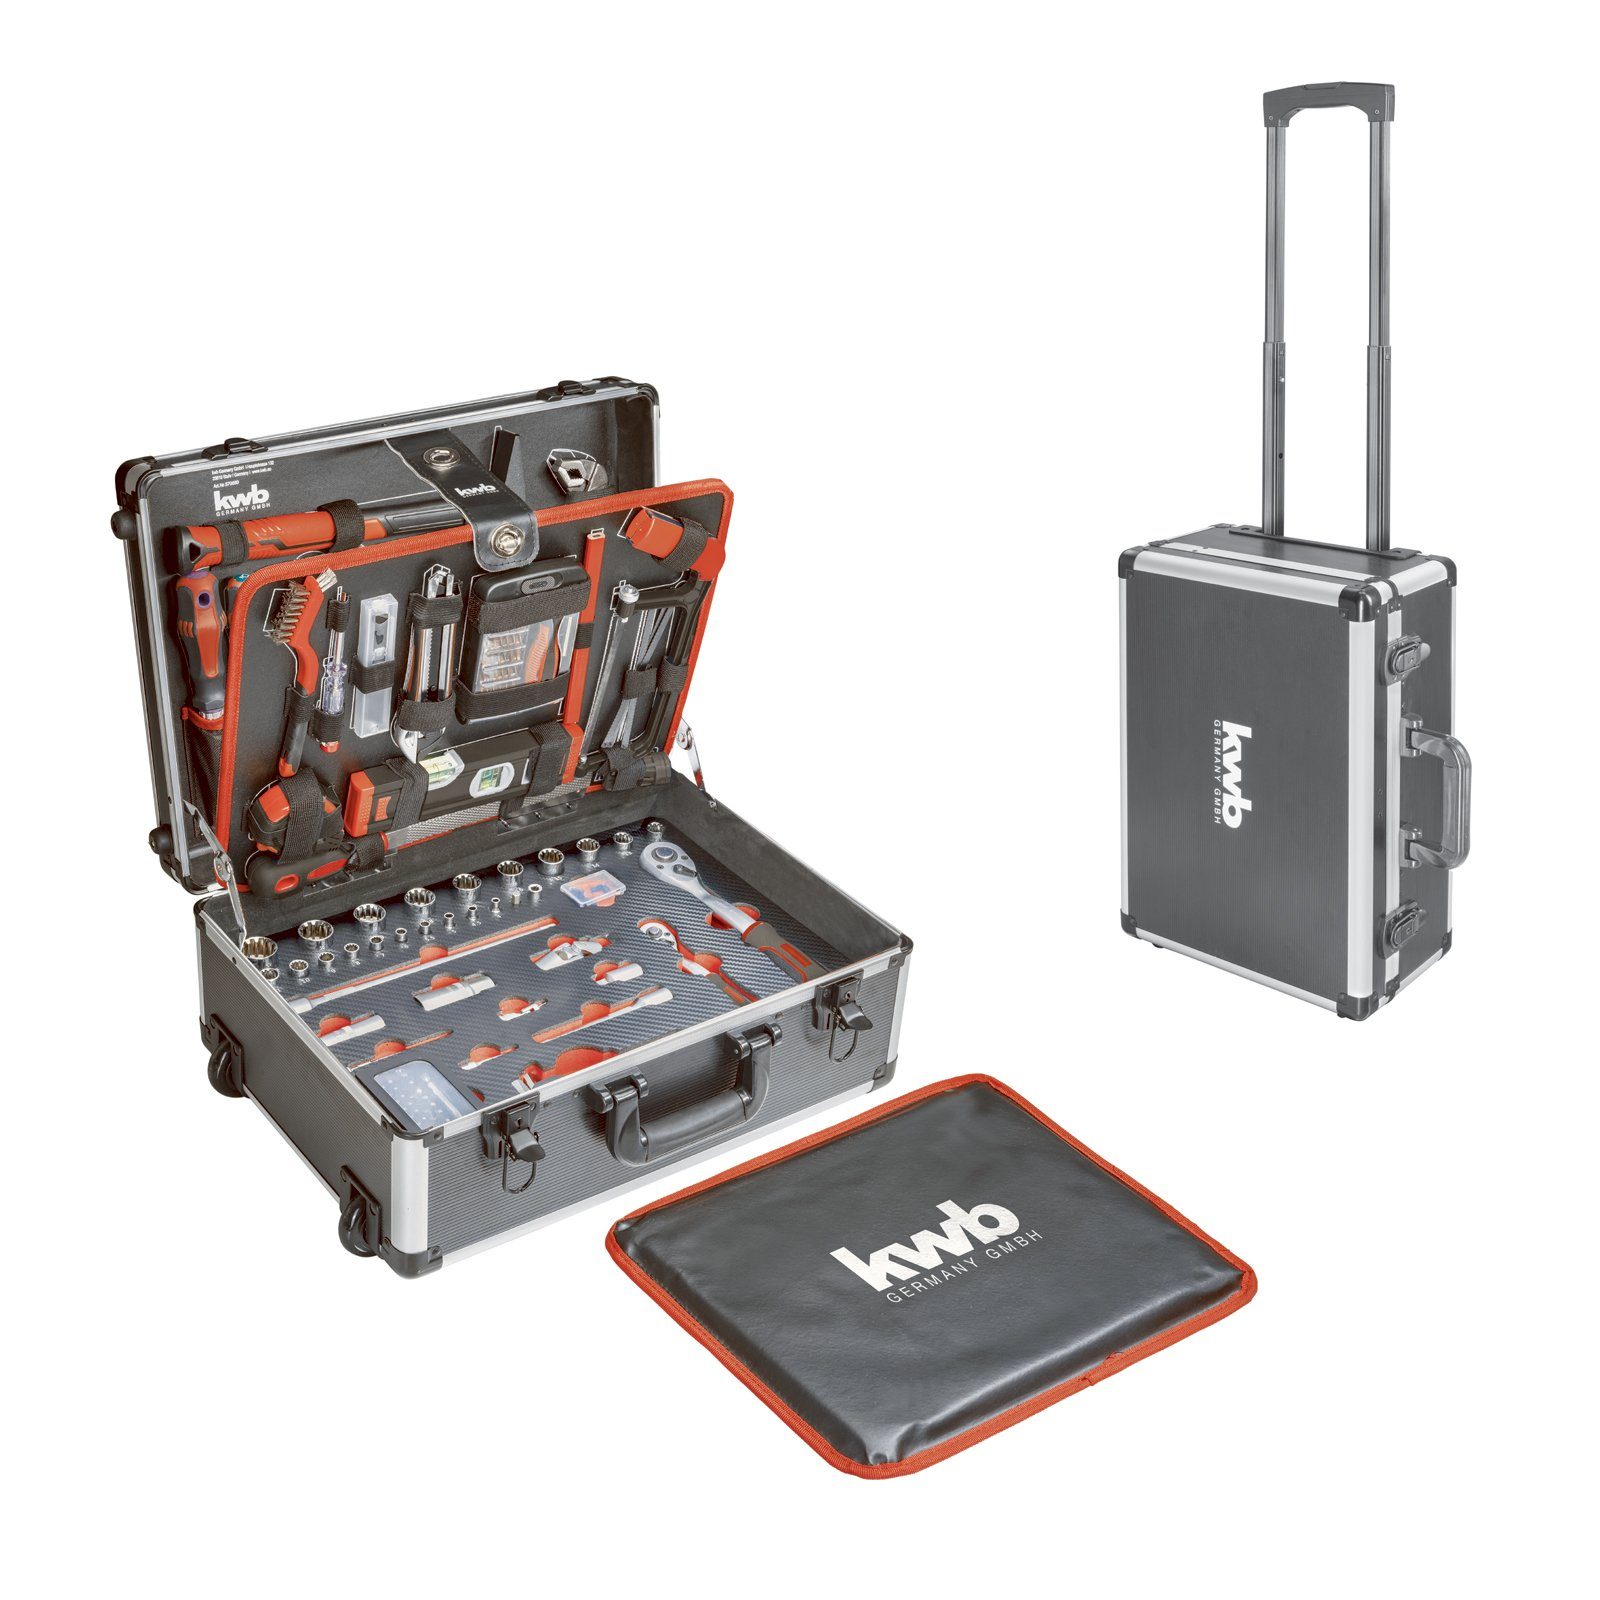 Werkzeugset kwb inkl. gefüllt, Trolley Werkzeug-Set, -teilig, 175 (Set) kwb Werkzeug-Koffer